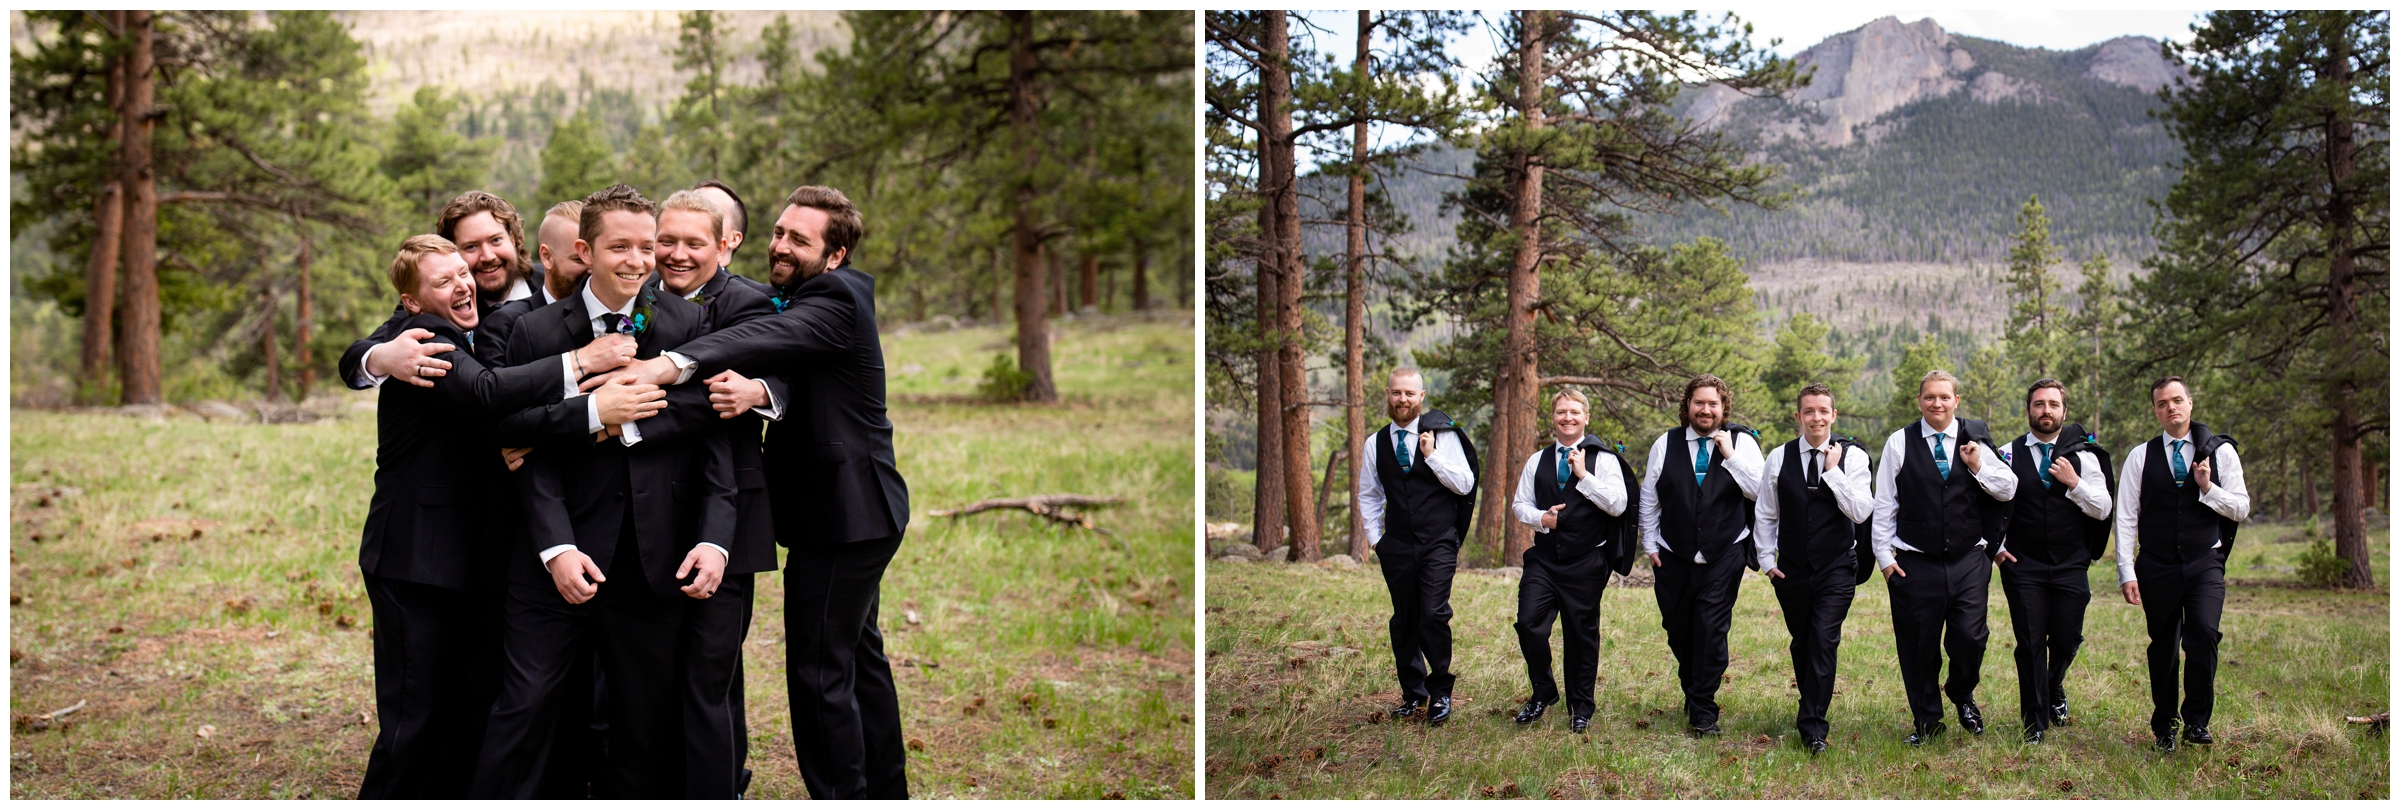 group hug of groom and groomsmen during Estes Park Colorado wedding 